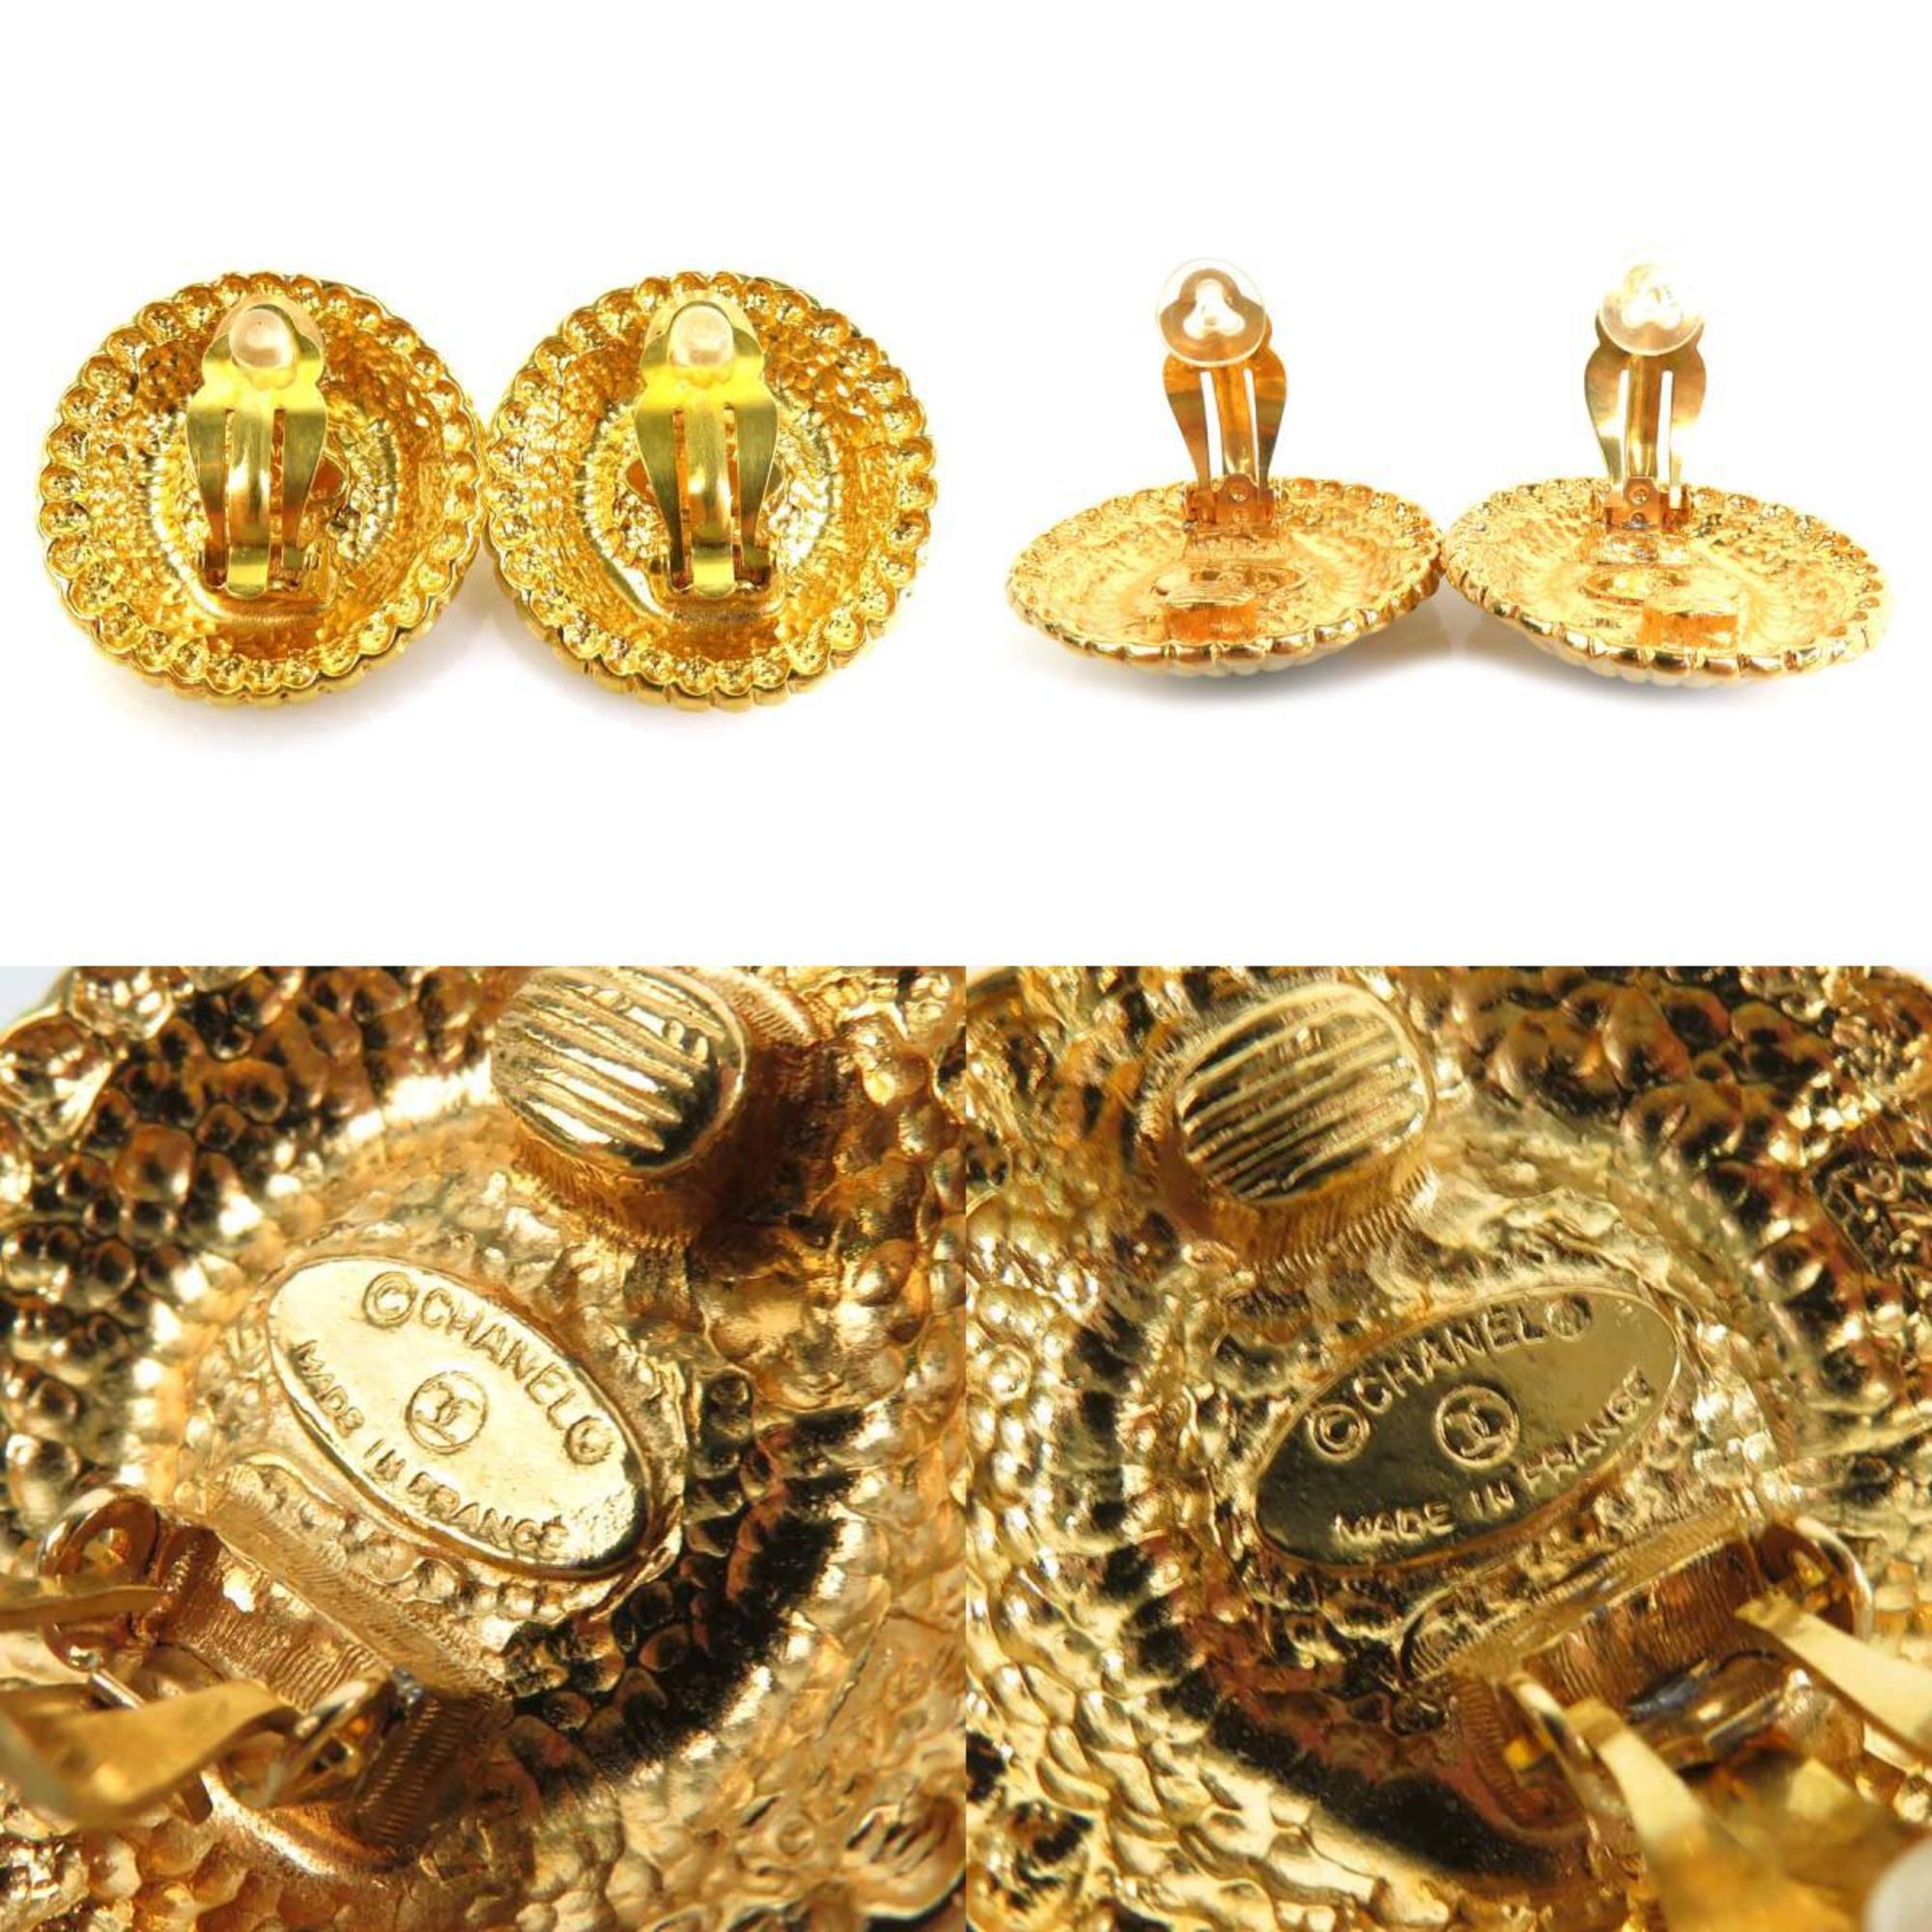 CHANEL earrings metal/glass stone gold x green ladies